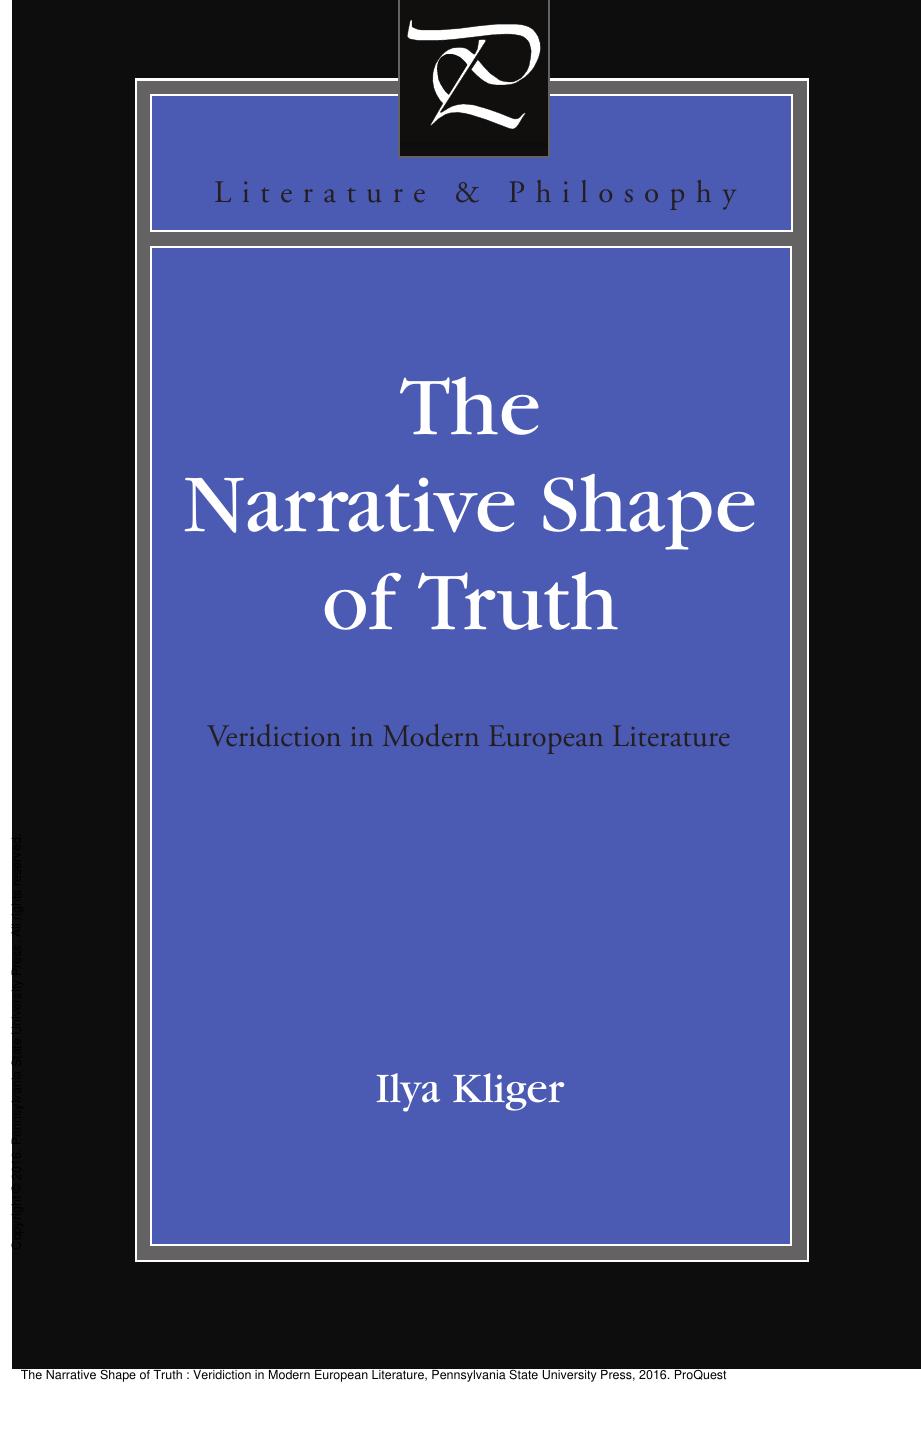 The Narrative Shape of Truth : Veridiction in Modern European Literature by Ilya Kliger